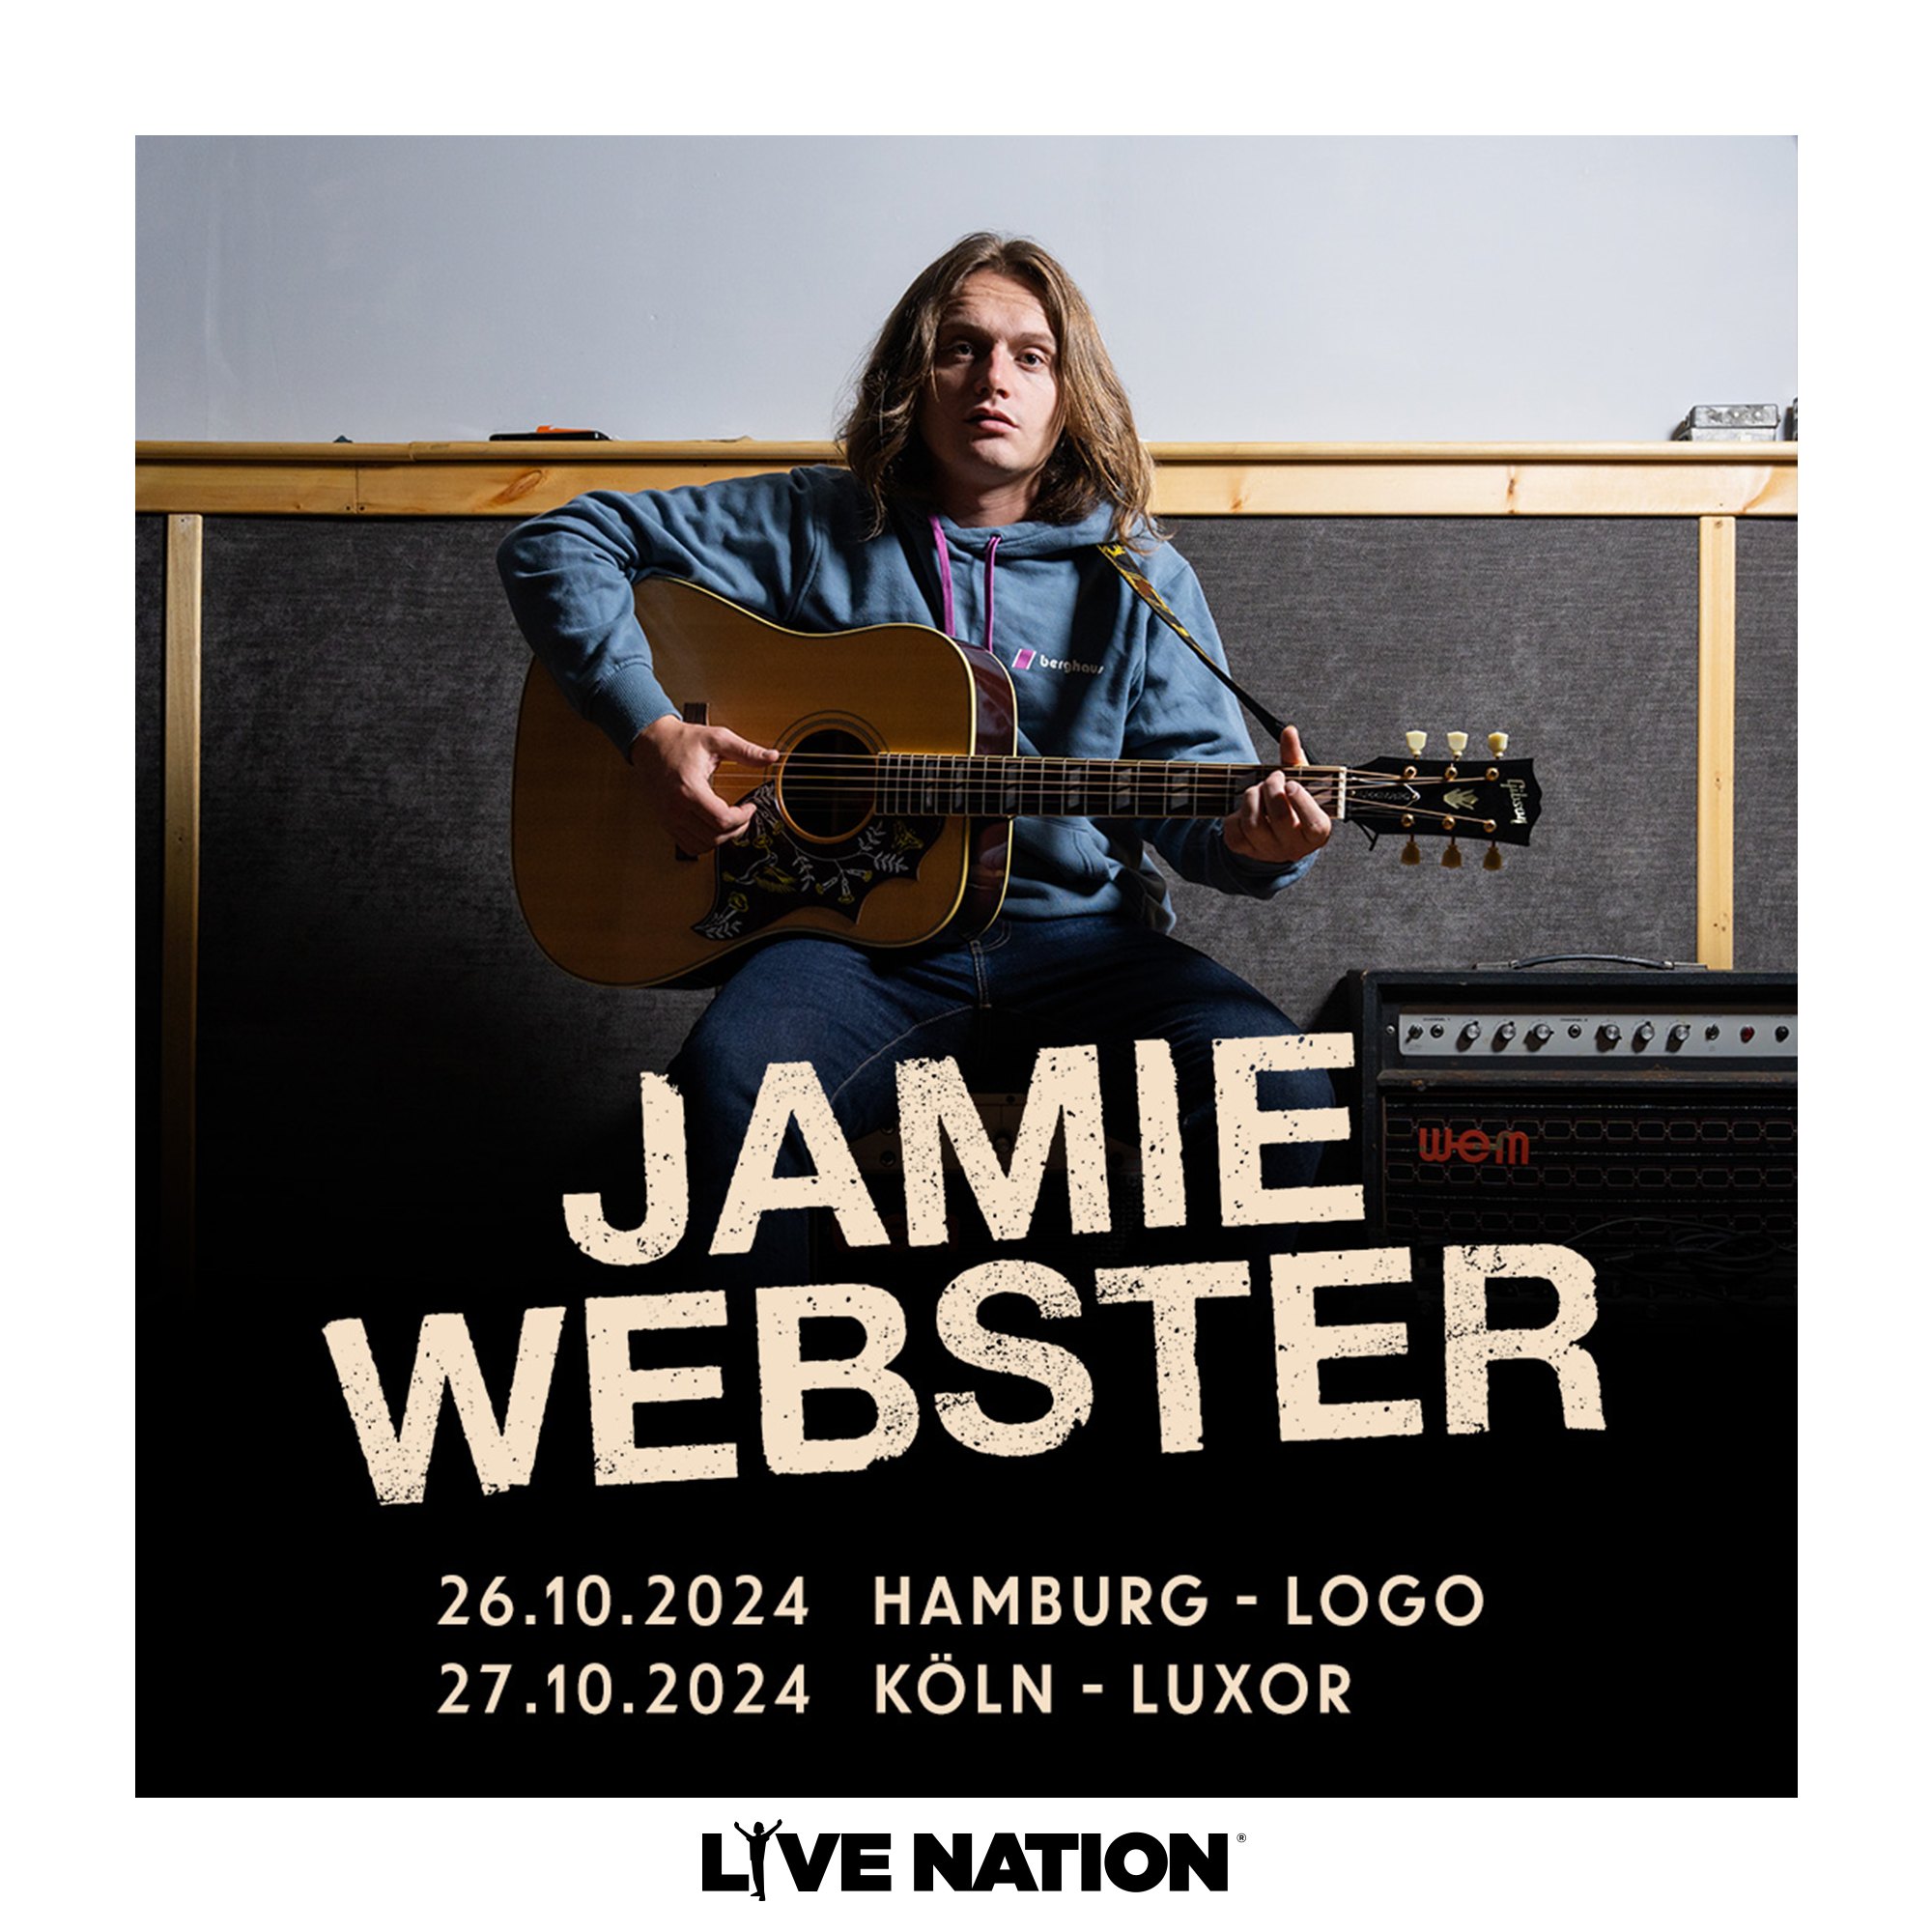 Jamie Webster at LOGO Hamburg Tickets